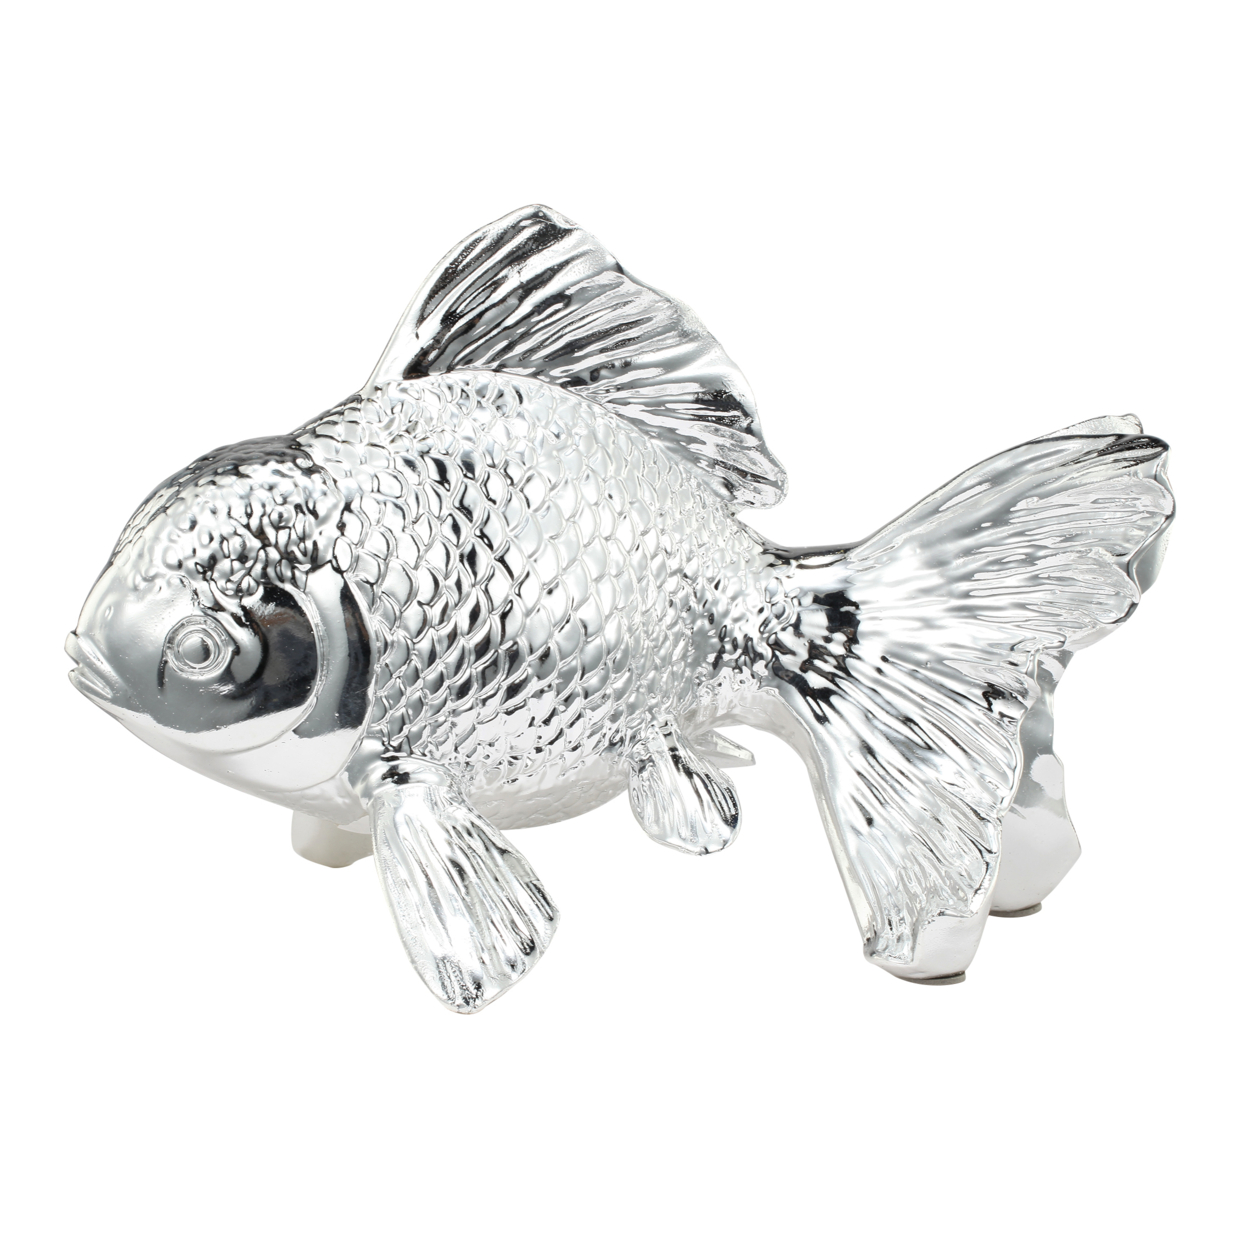 Don 10 Inch Goldfish Accent Figurine, Tabletop Decor, Chrome Finished Resin- Saltoro Sherpi